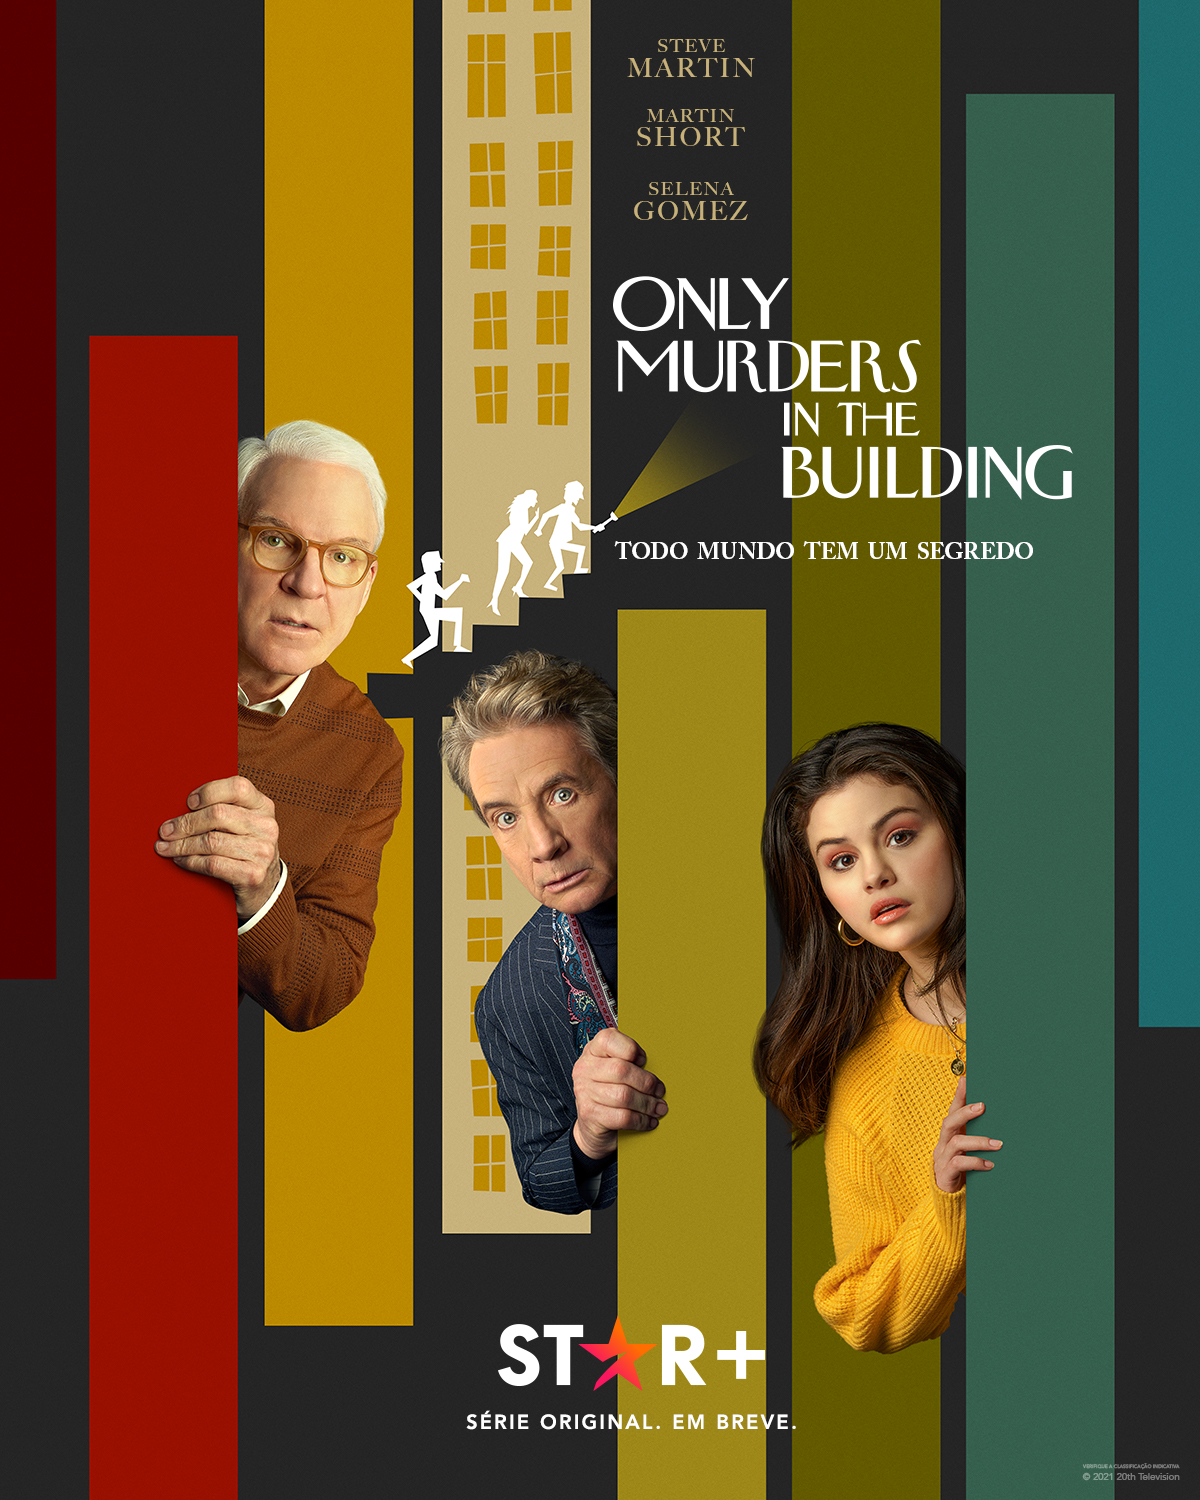 Only murders in the Building'' chega no Brasil com estreia exclusiva no Star+